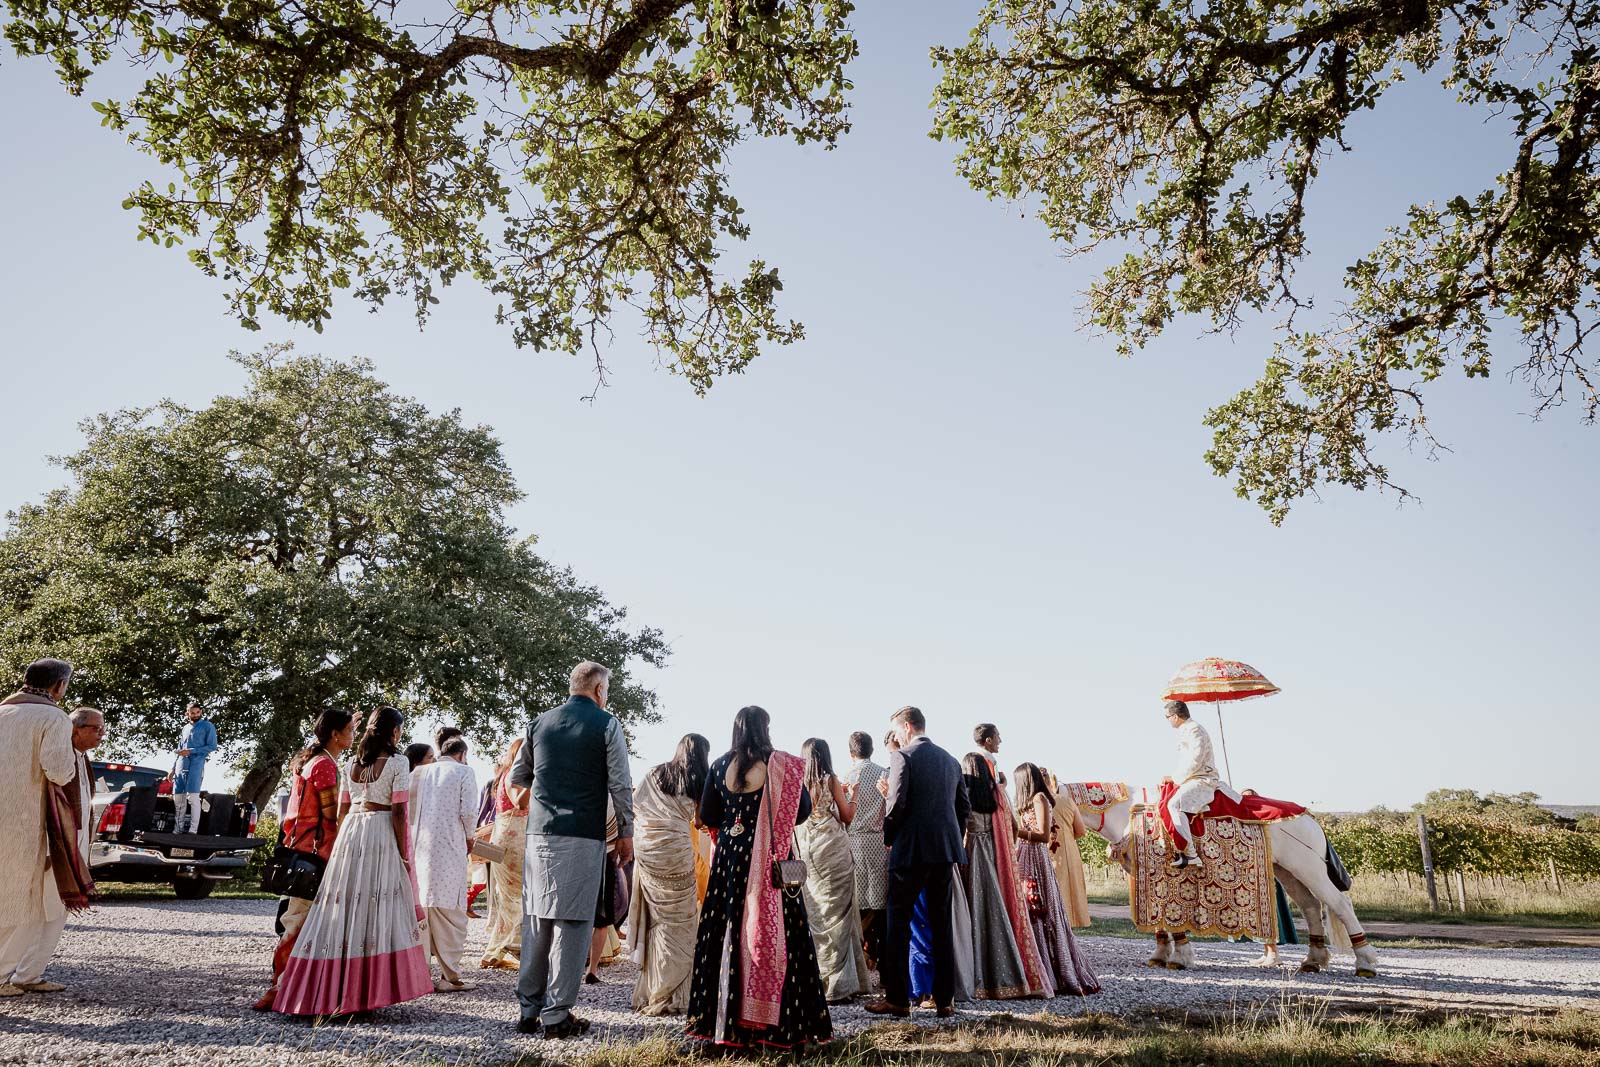 16 South Asian Indian Wedding Camp Lucy Texas Leica Wedding Photographer Philip Thomas